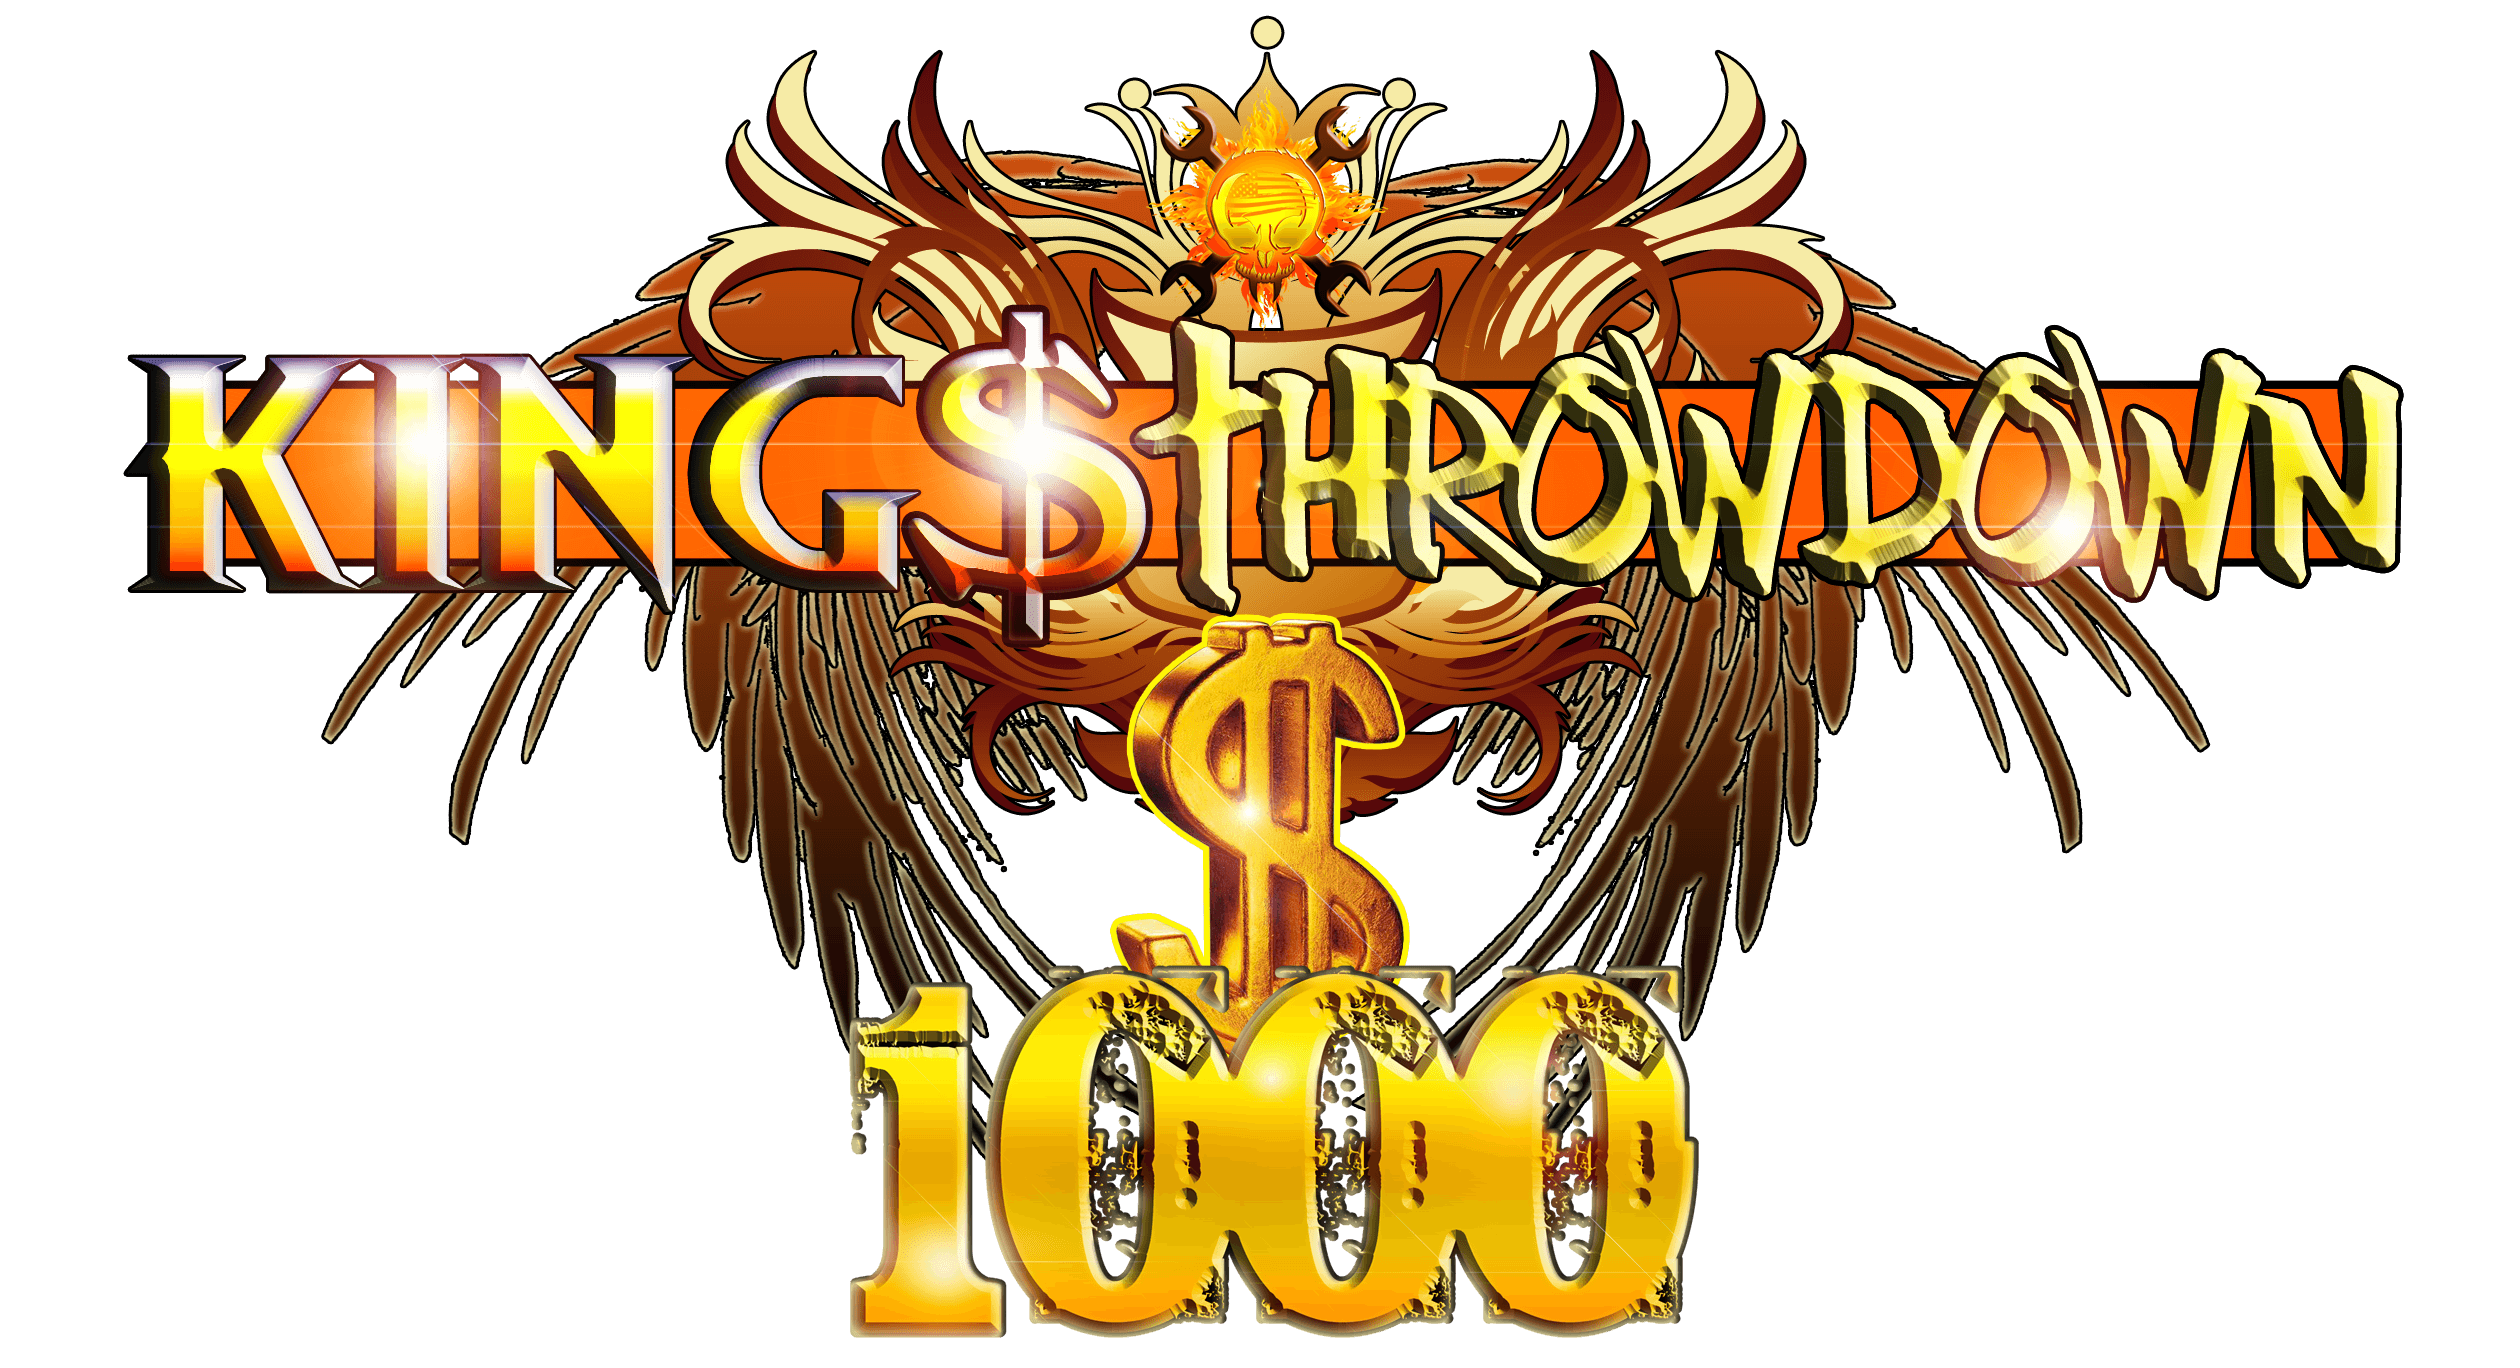 Kings Throwdown $1000 gold logo